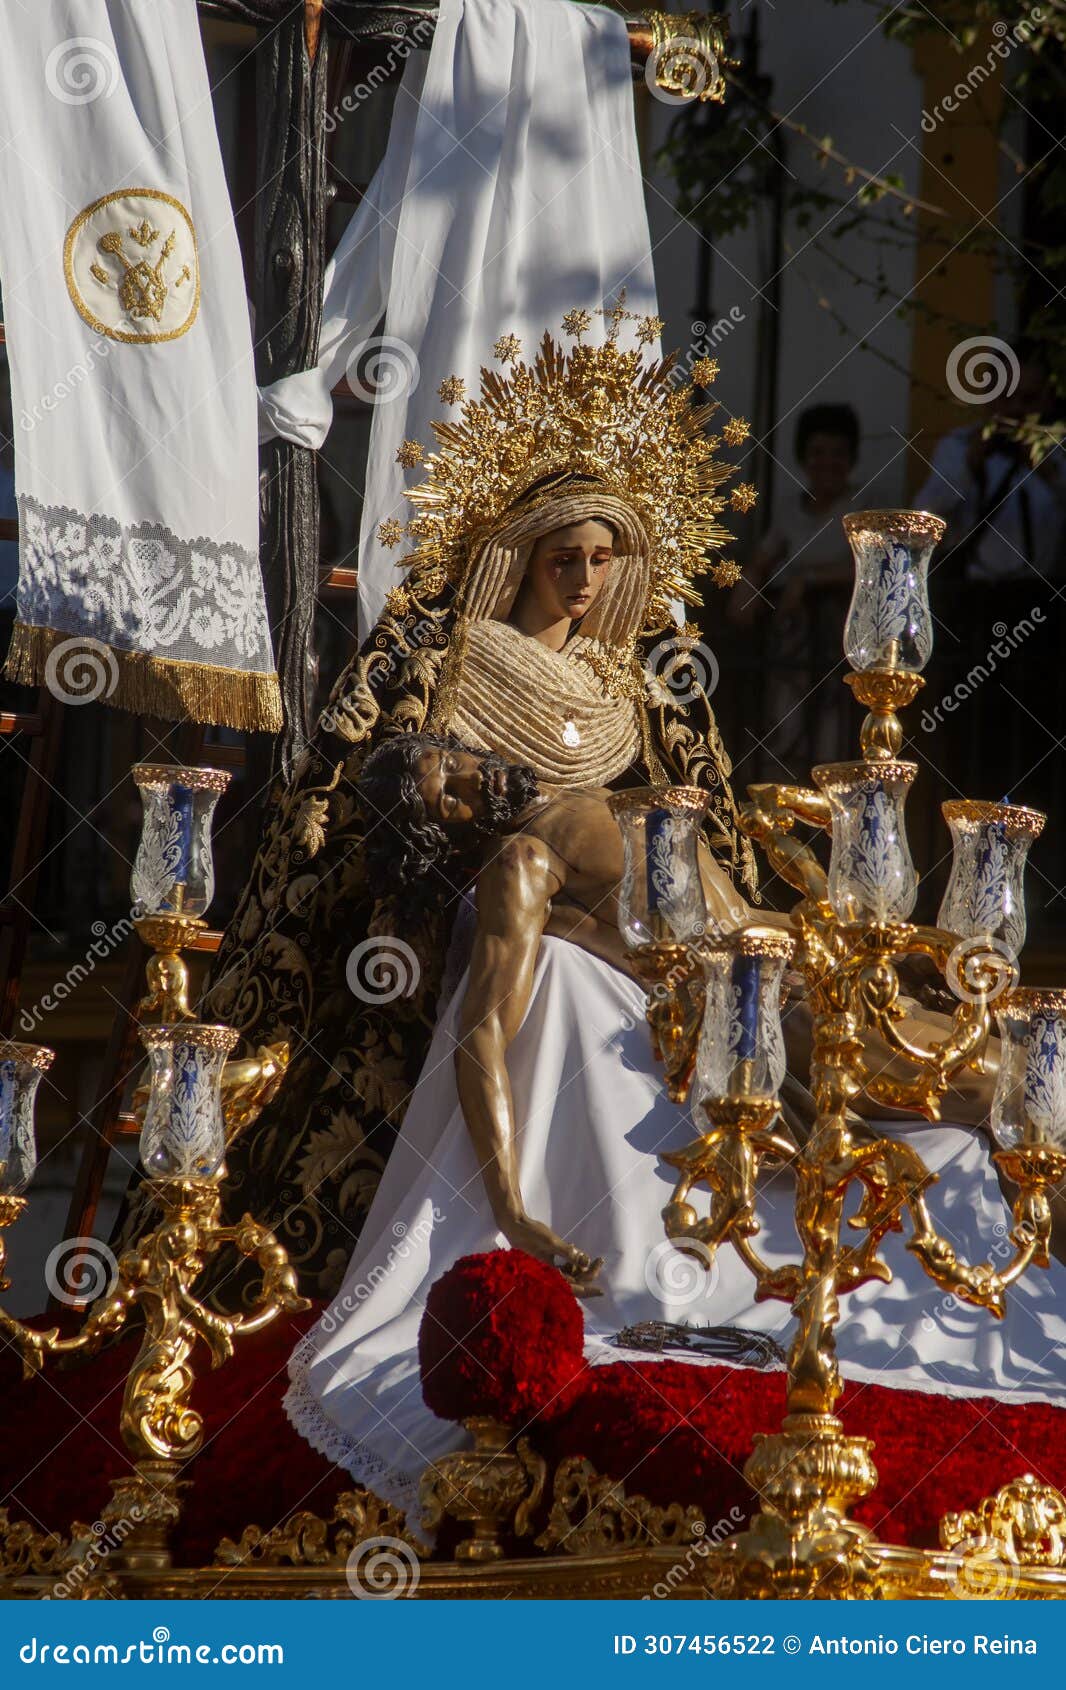 images of the holy week of seville, brotherhood of el baratillo